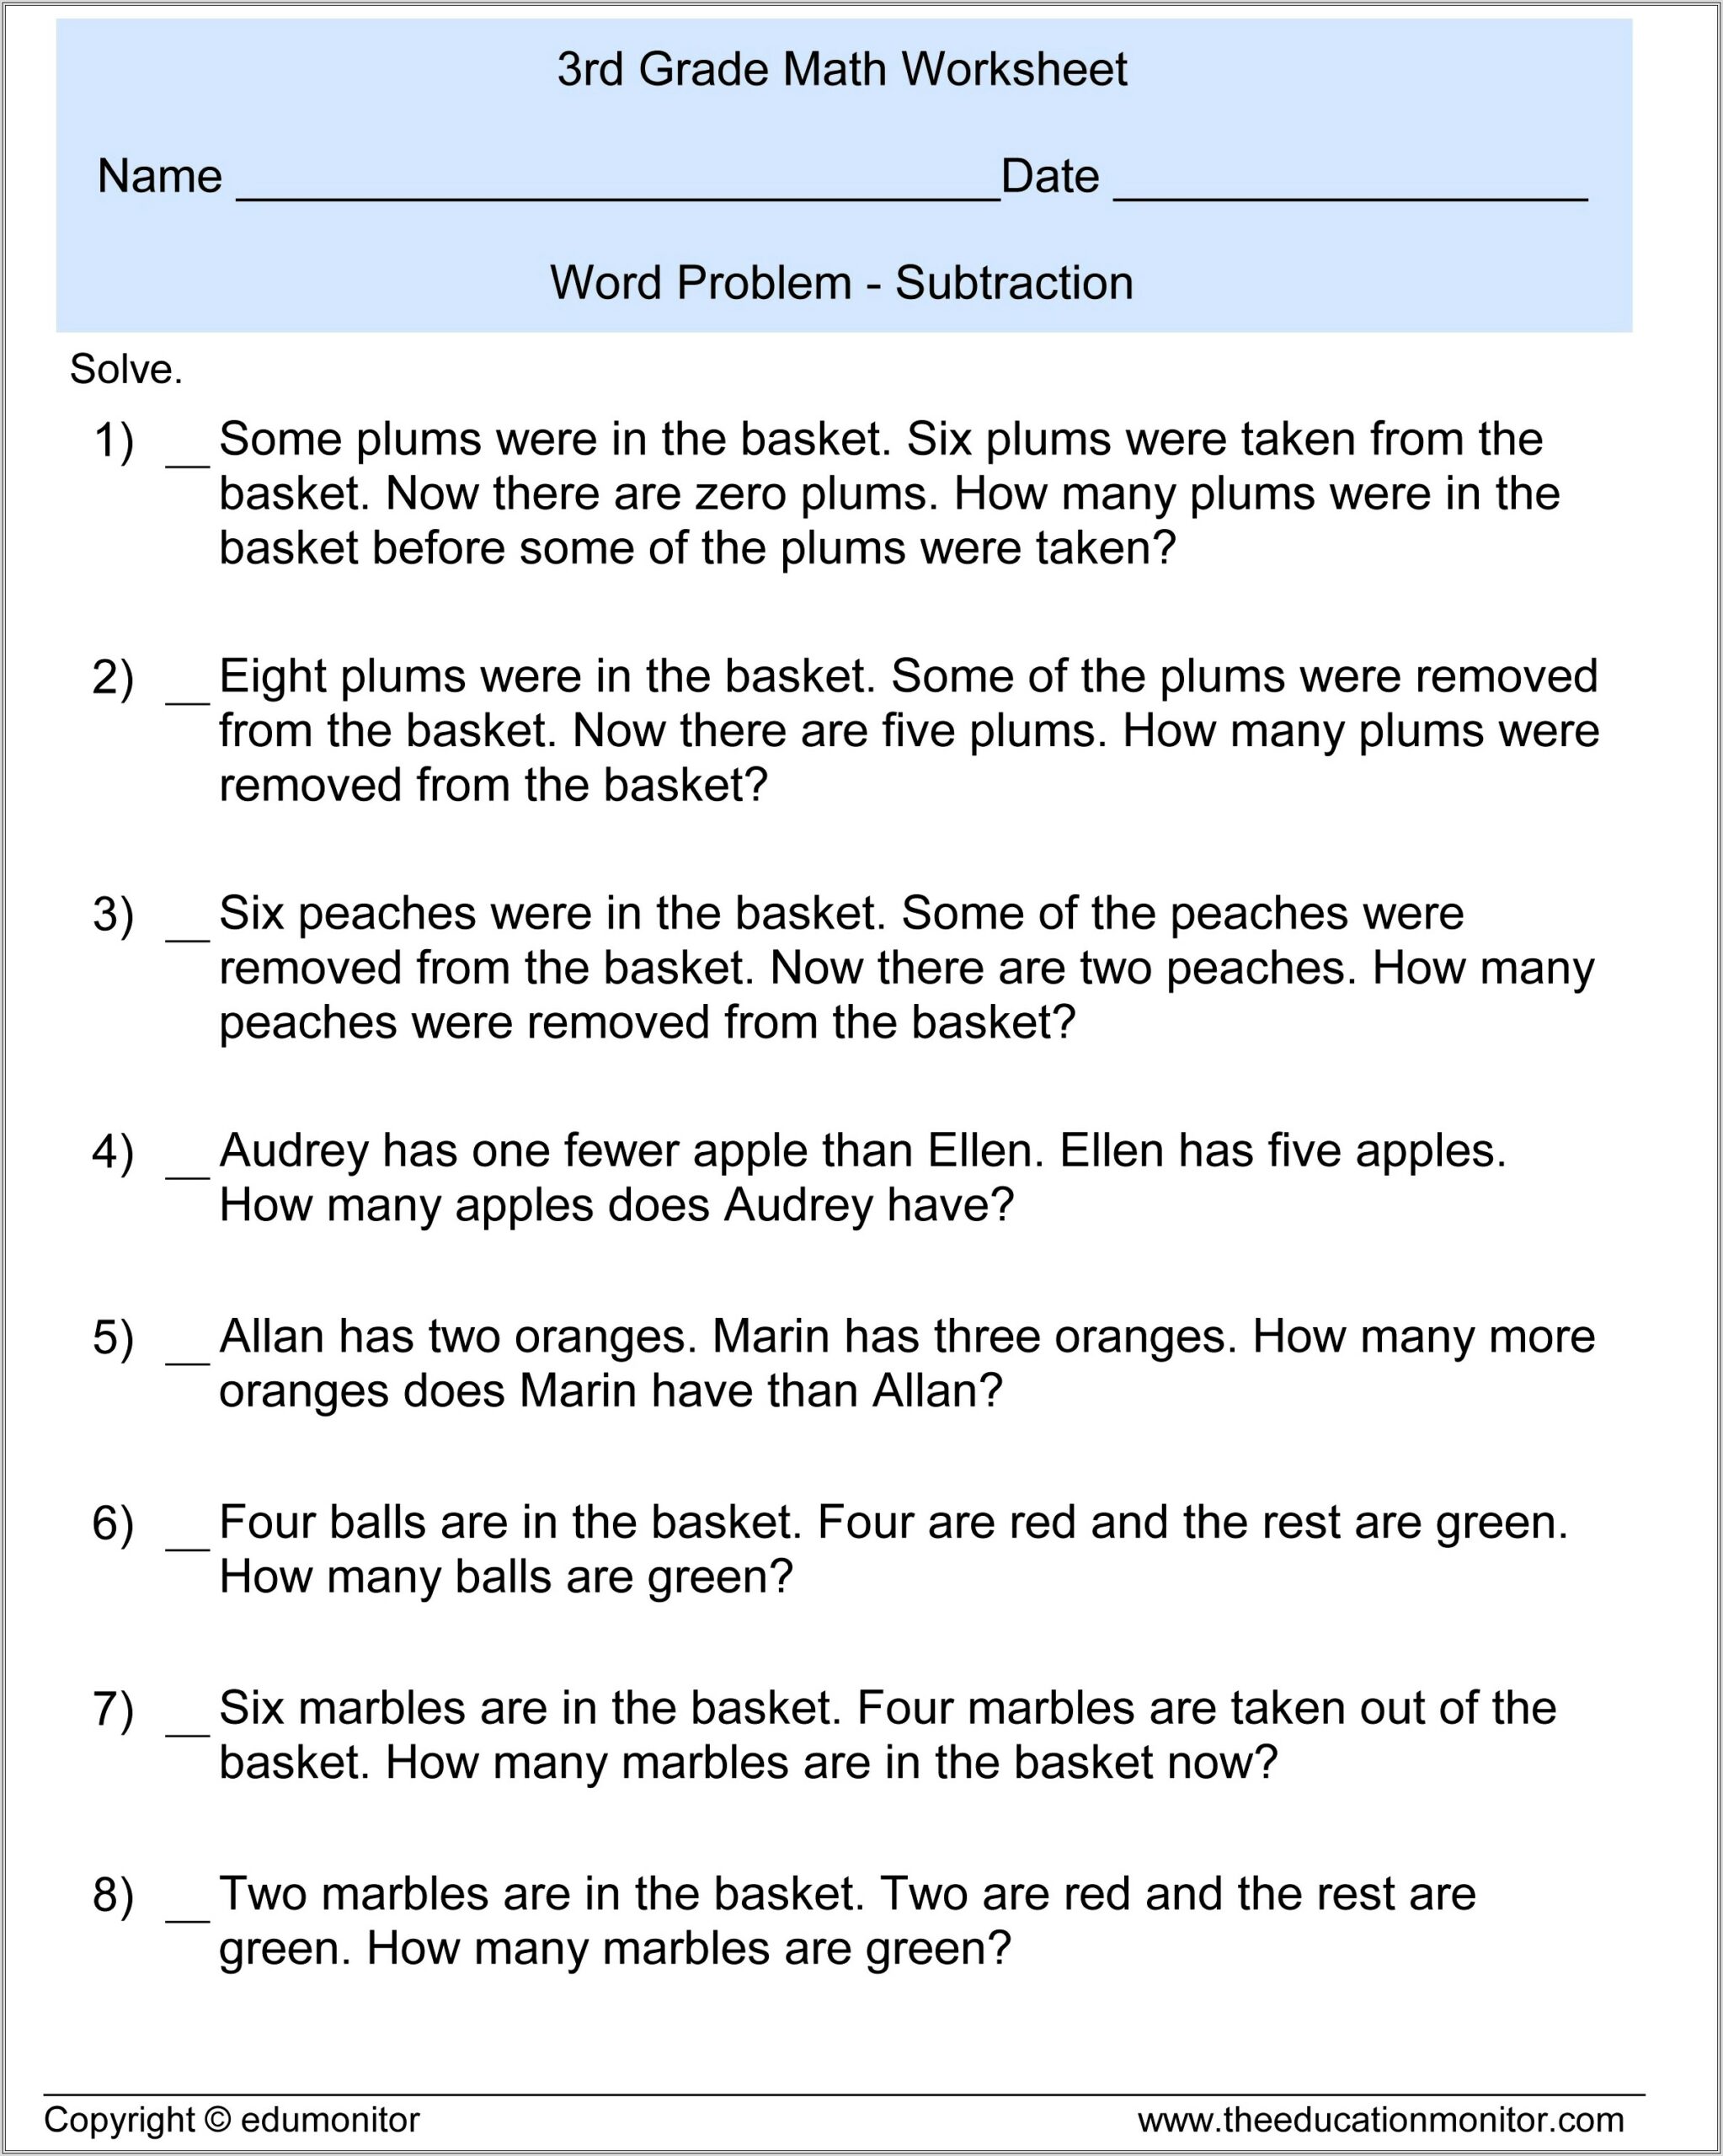 3rd Grade Math Word Problems Worksheets Pdf